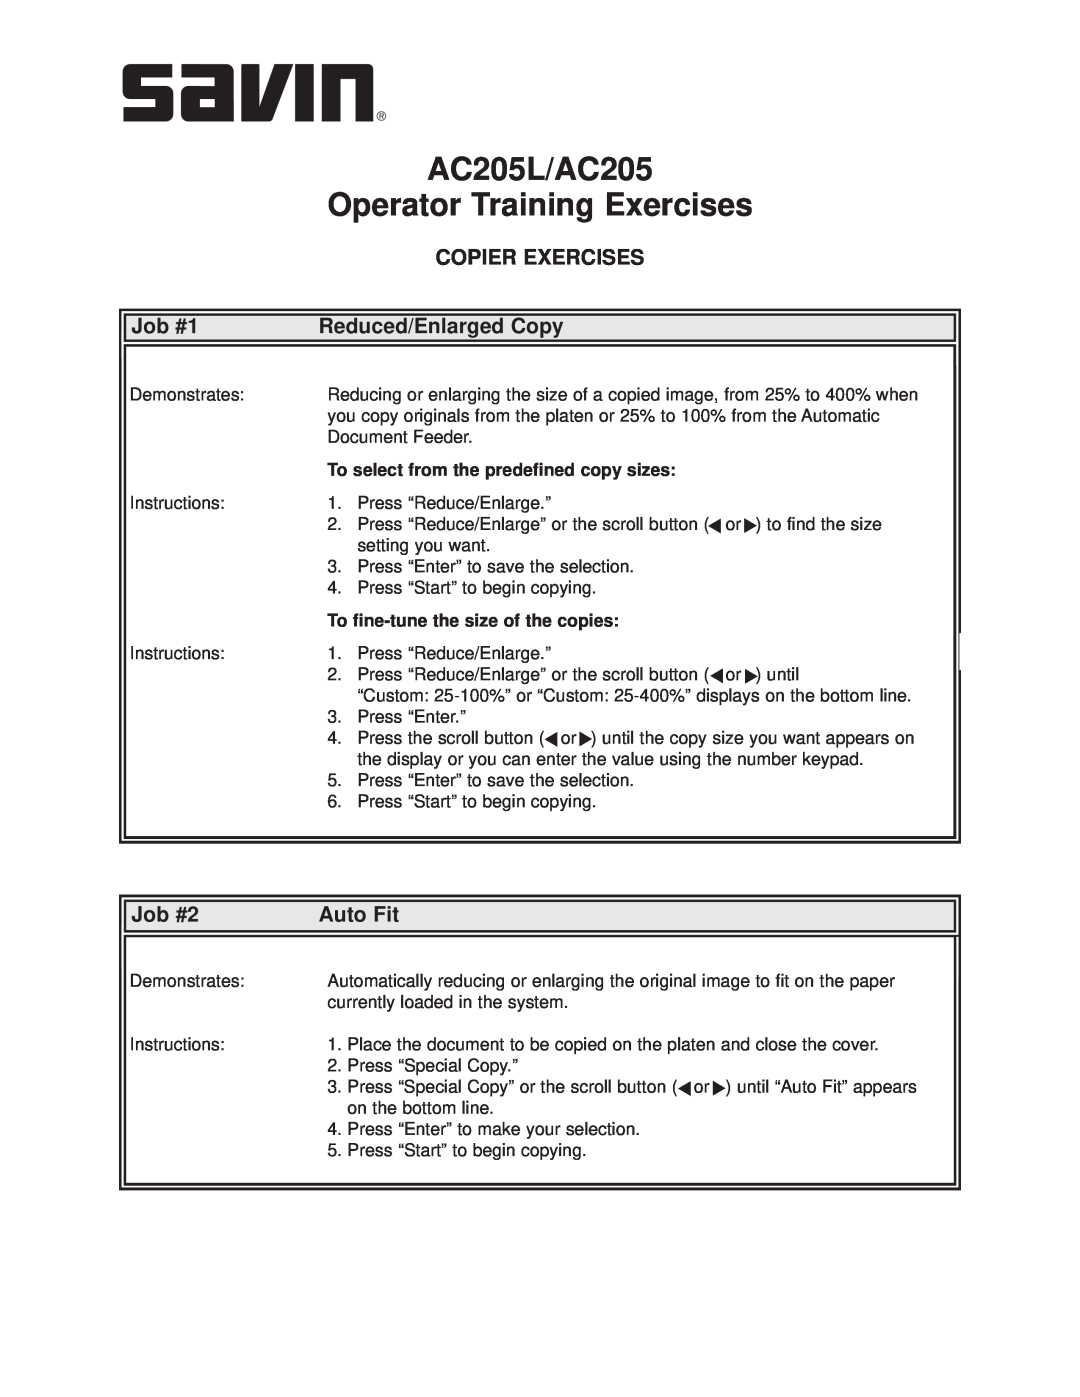 Savin AC205L/AC205, Operator Training Exercises, Job #1, Reduced/Enlarged Copy, Job #2, Auto Fit, Copier Exercises 